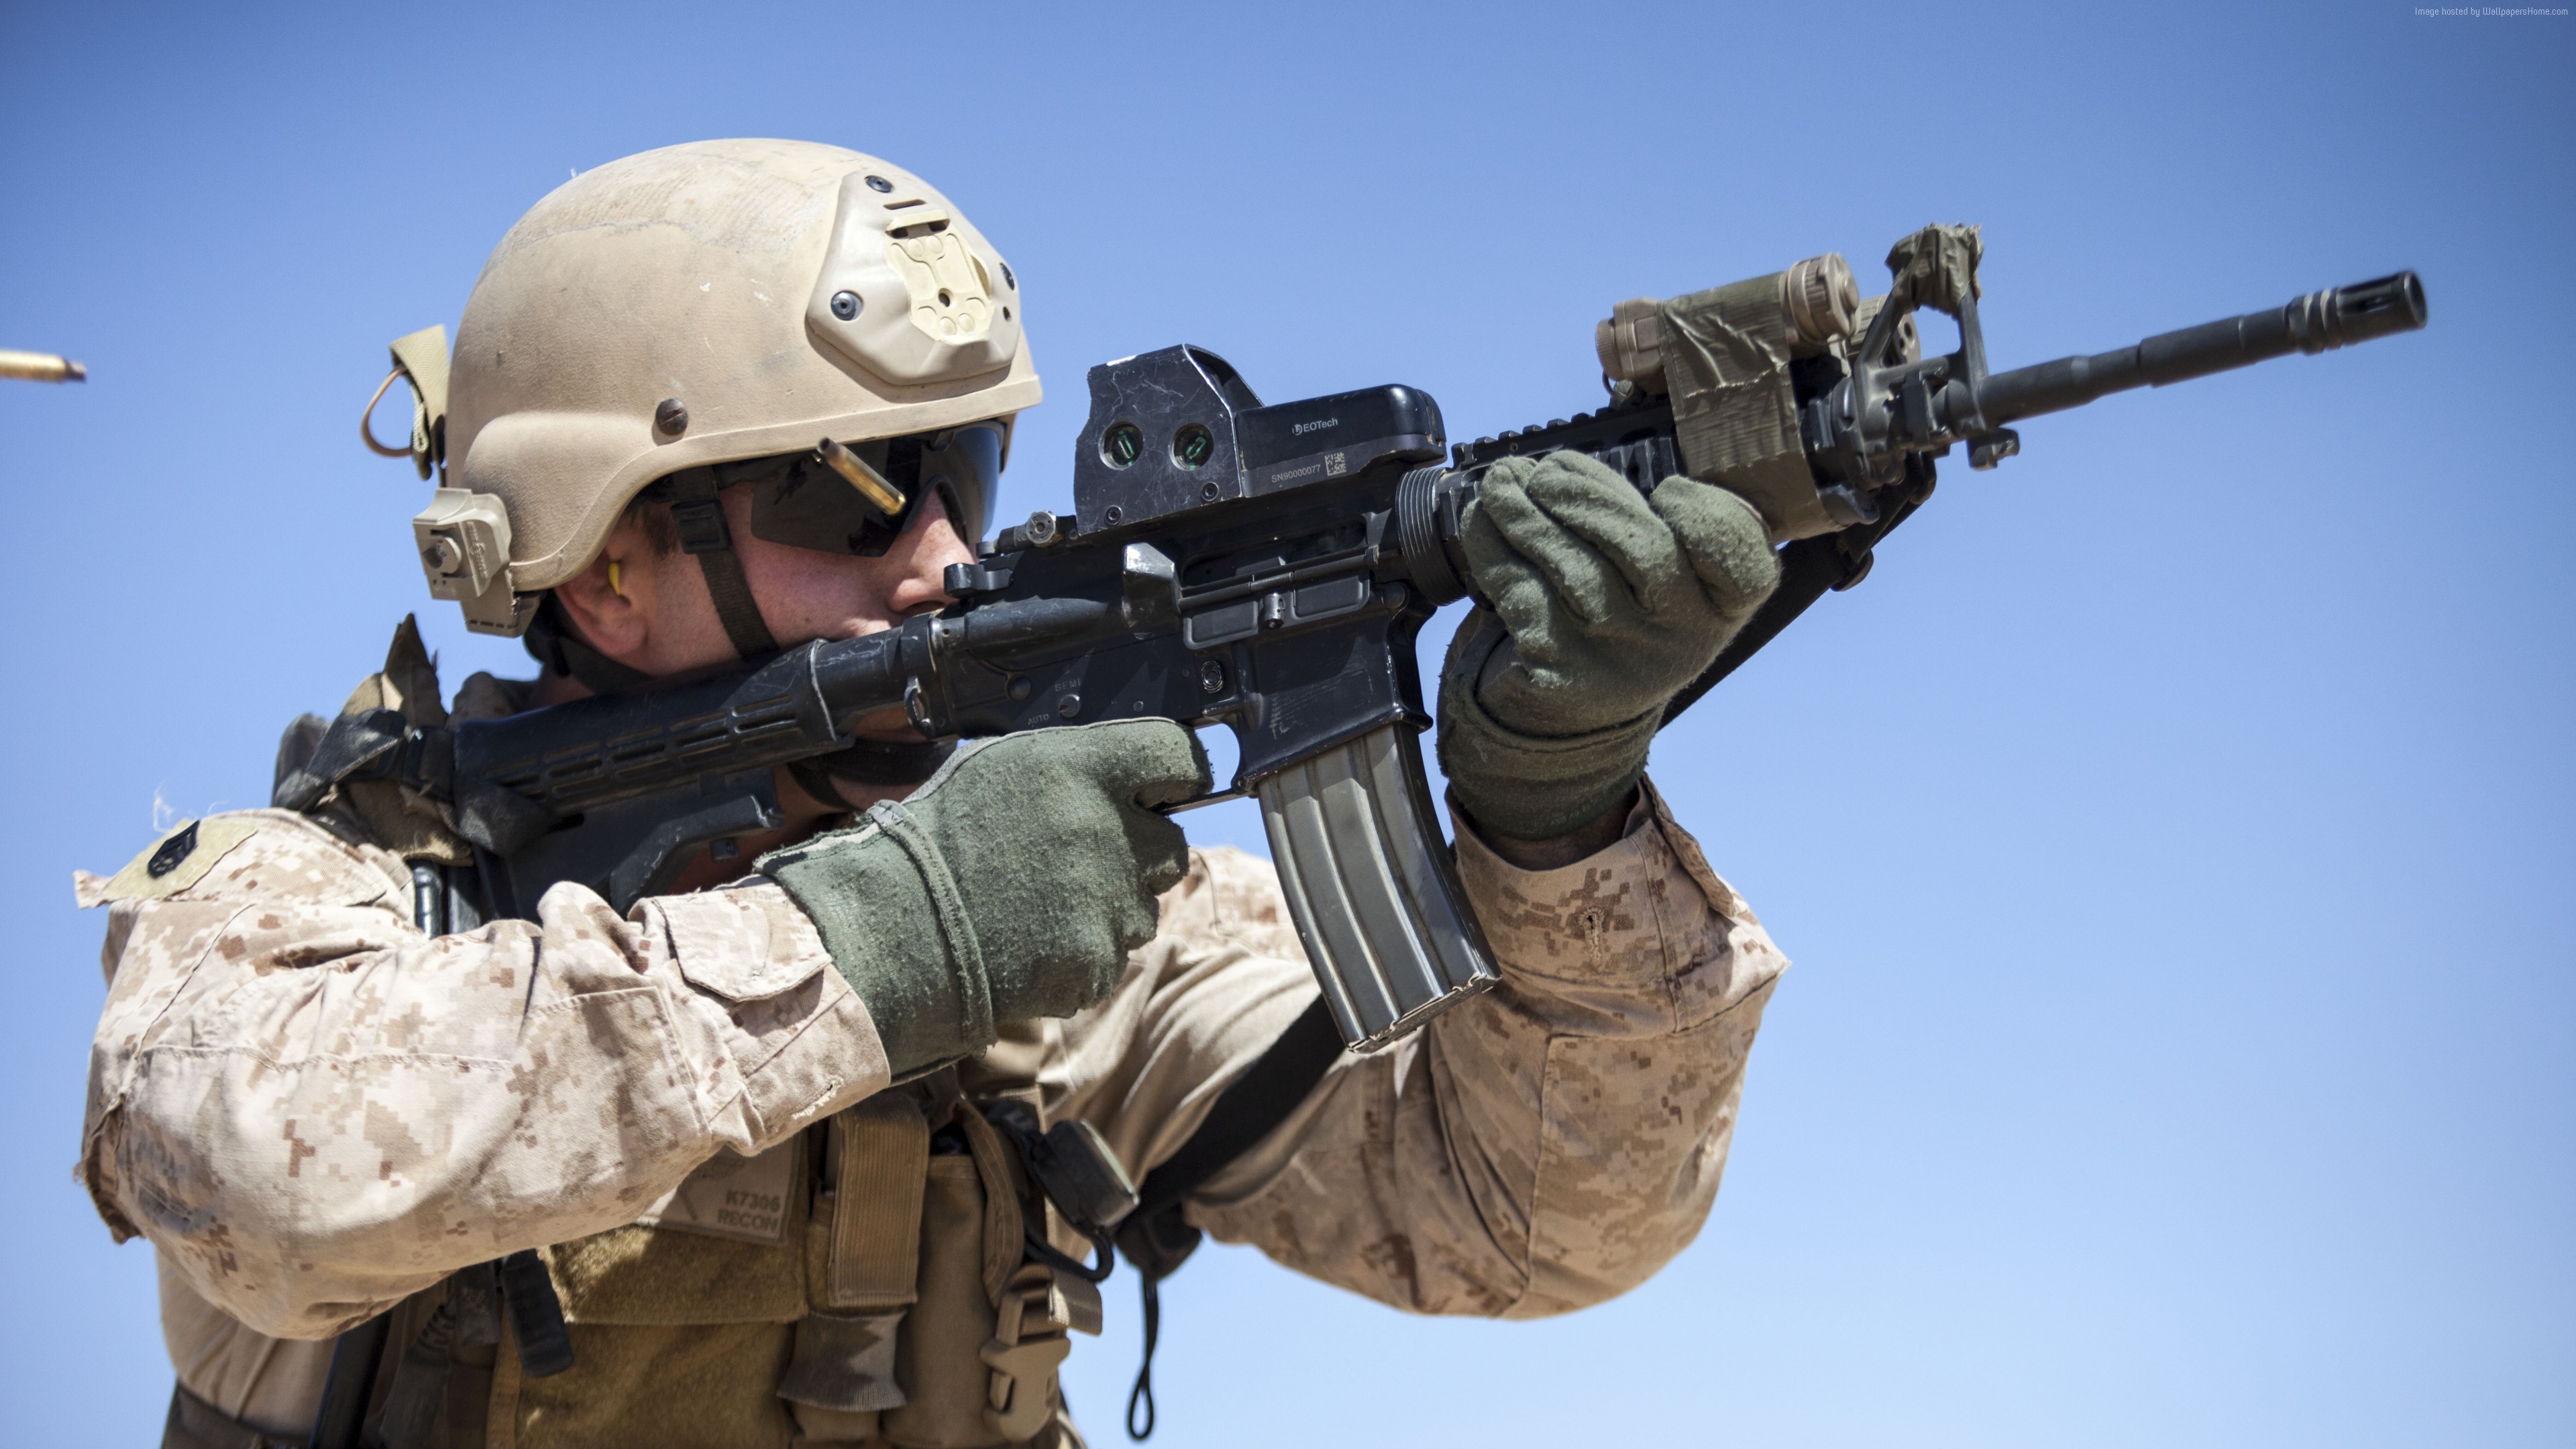 3840x2160 Wallpaper AR-15, M-16, red sight, U.S. Army, Marine Corps, Military